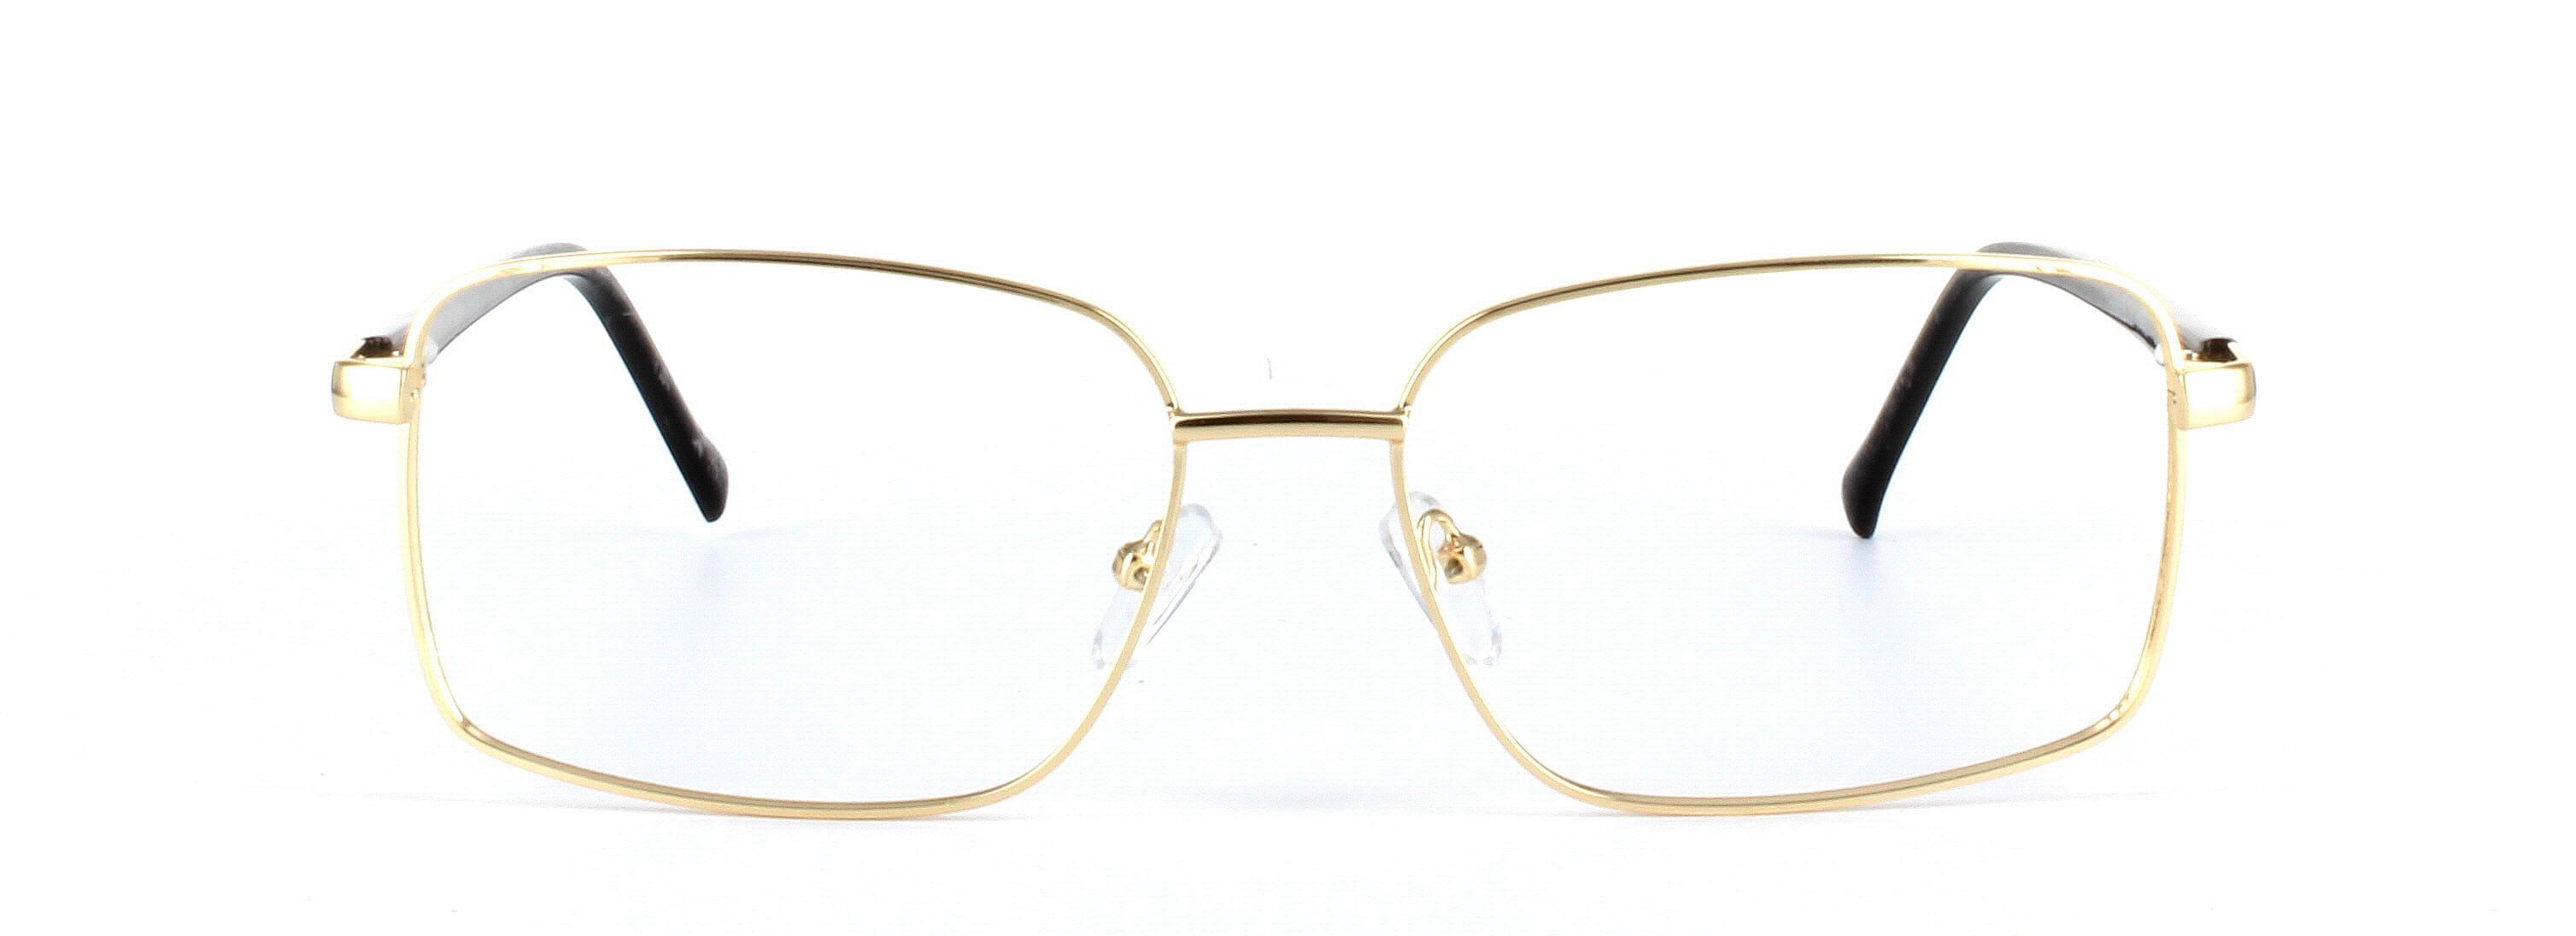 Marlborough Gold Full Rim Rectangular Glasses - Image View 5